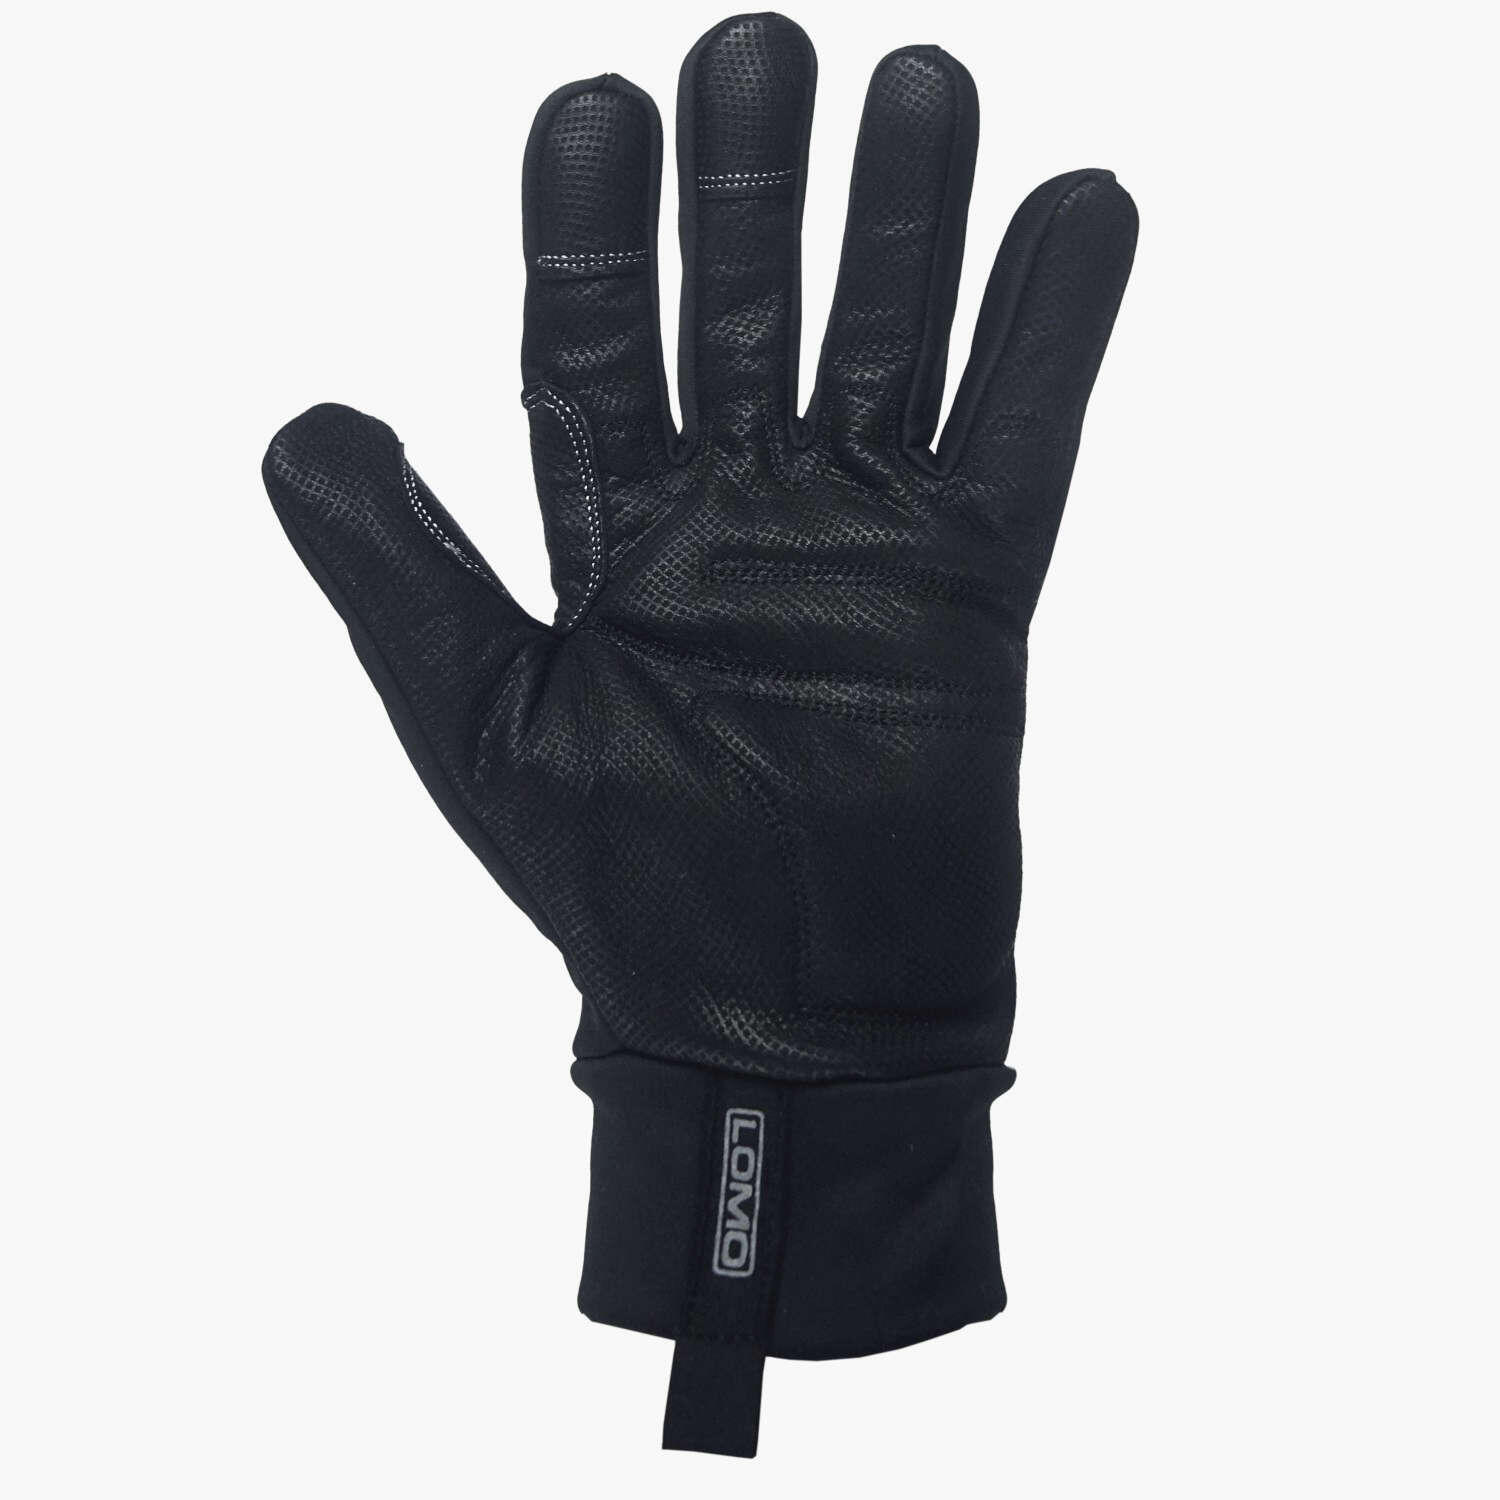 Lomo Winter Mountain Bike Gloves 4/7